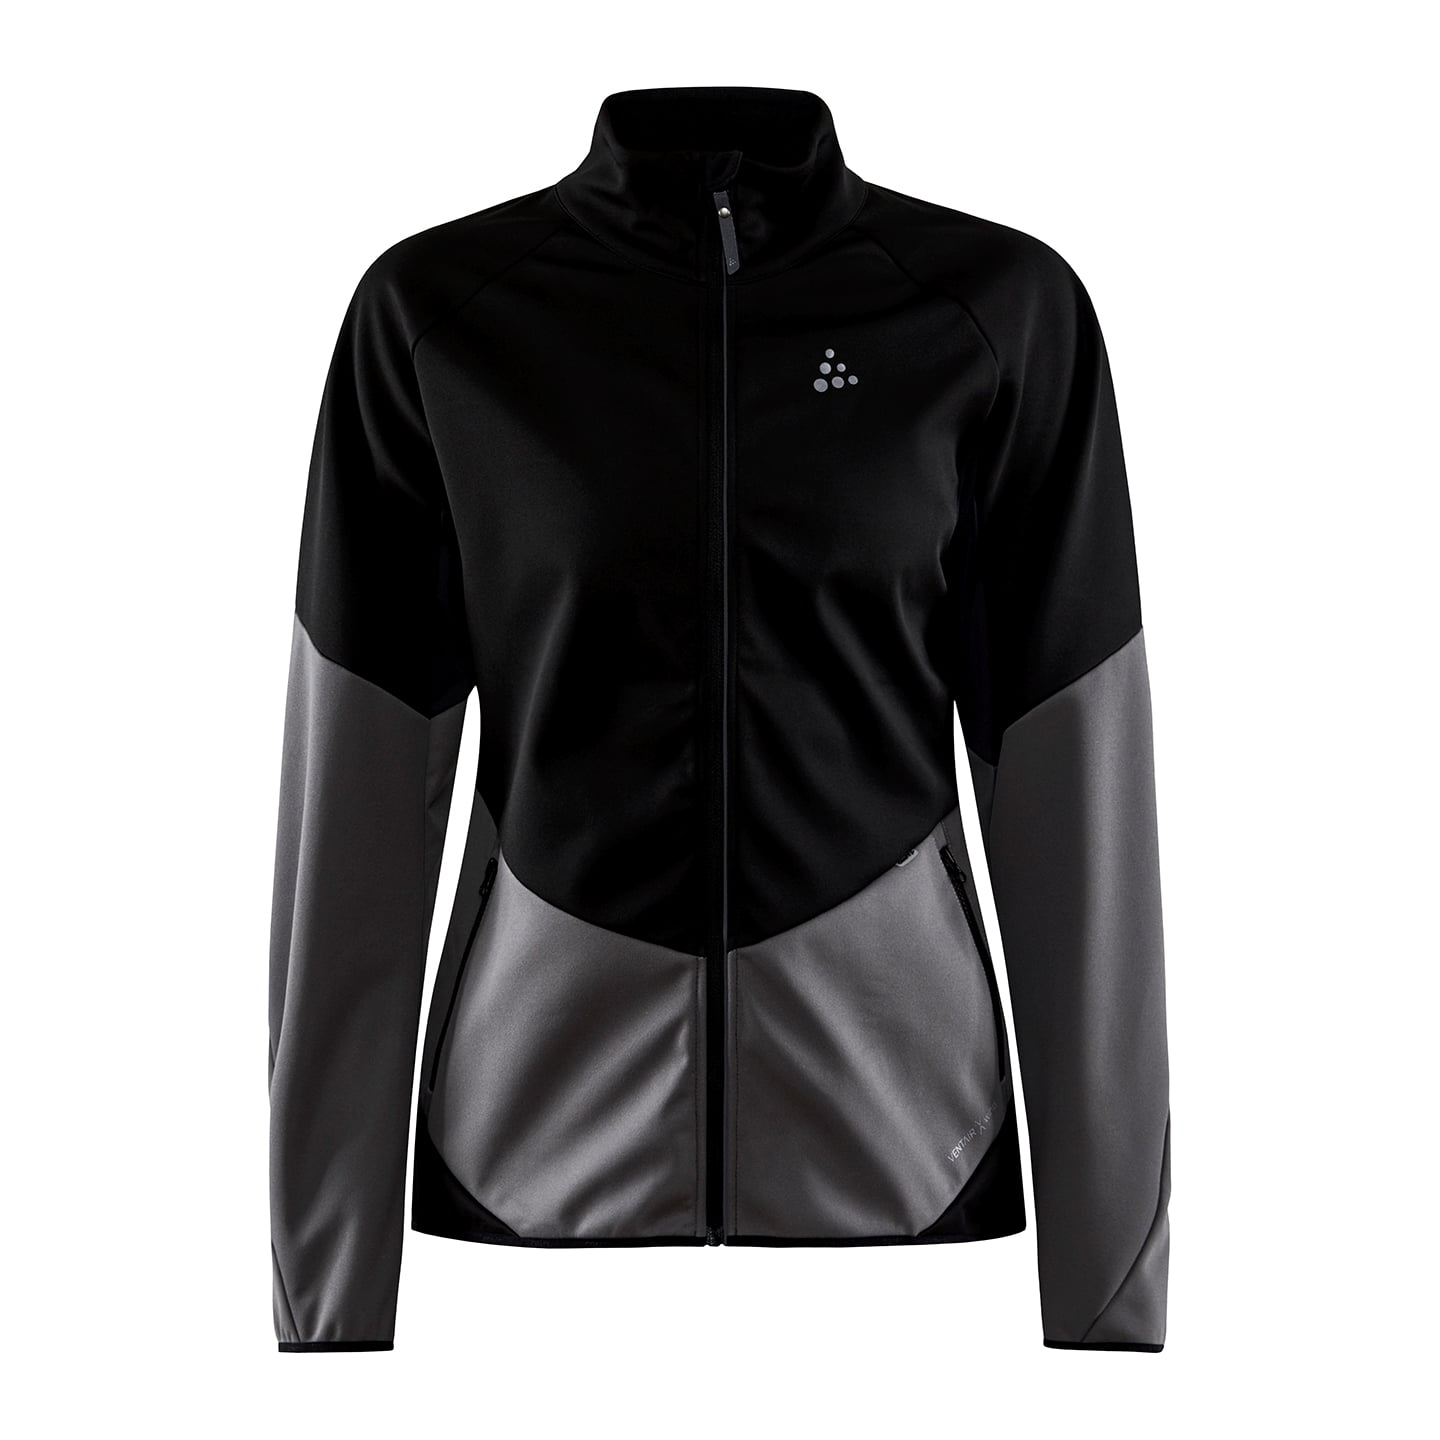 CRAFT Core Glide Women’s Waterproof Jacket Women’s Thermal Jacket, size M, Cycle jacket, Cycling clothing